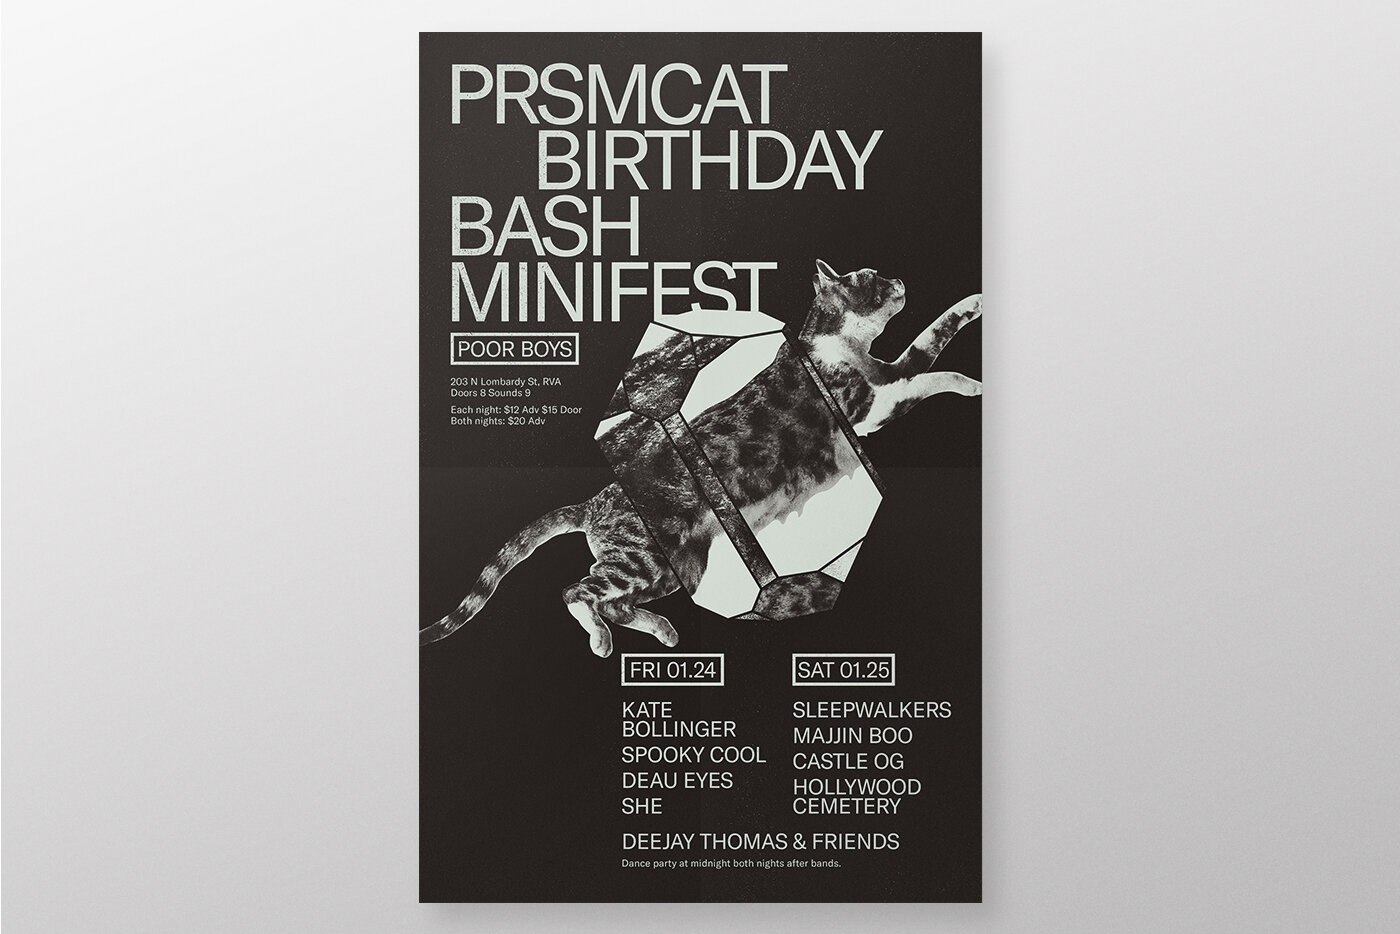 PRSMcat Birthday Bash Concert Poster